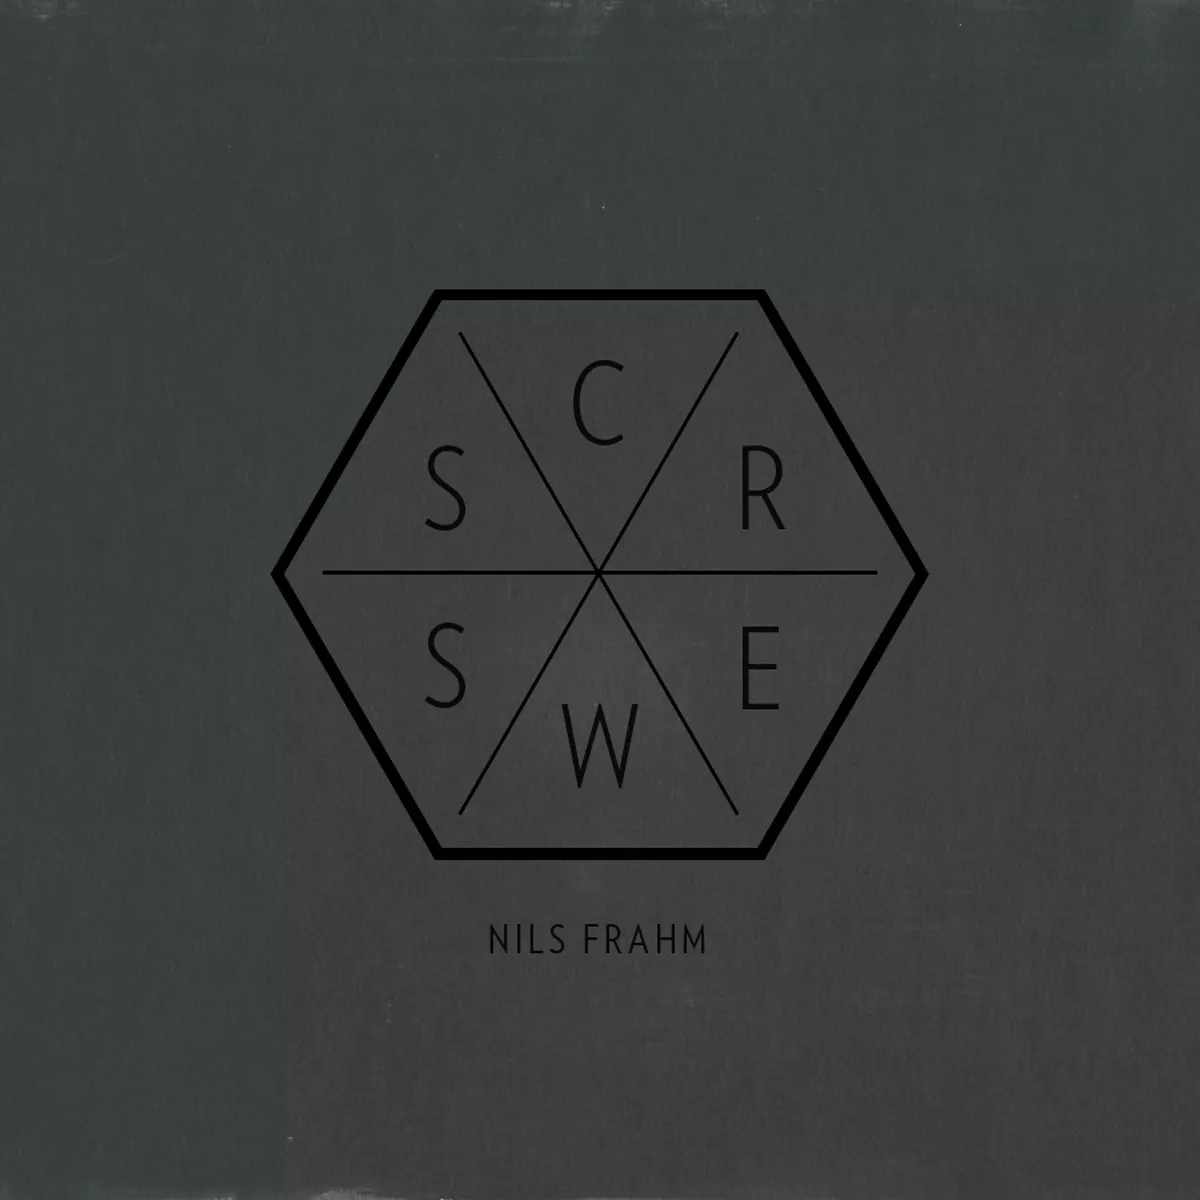 Screws - Nils Frahm